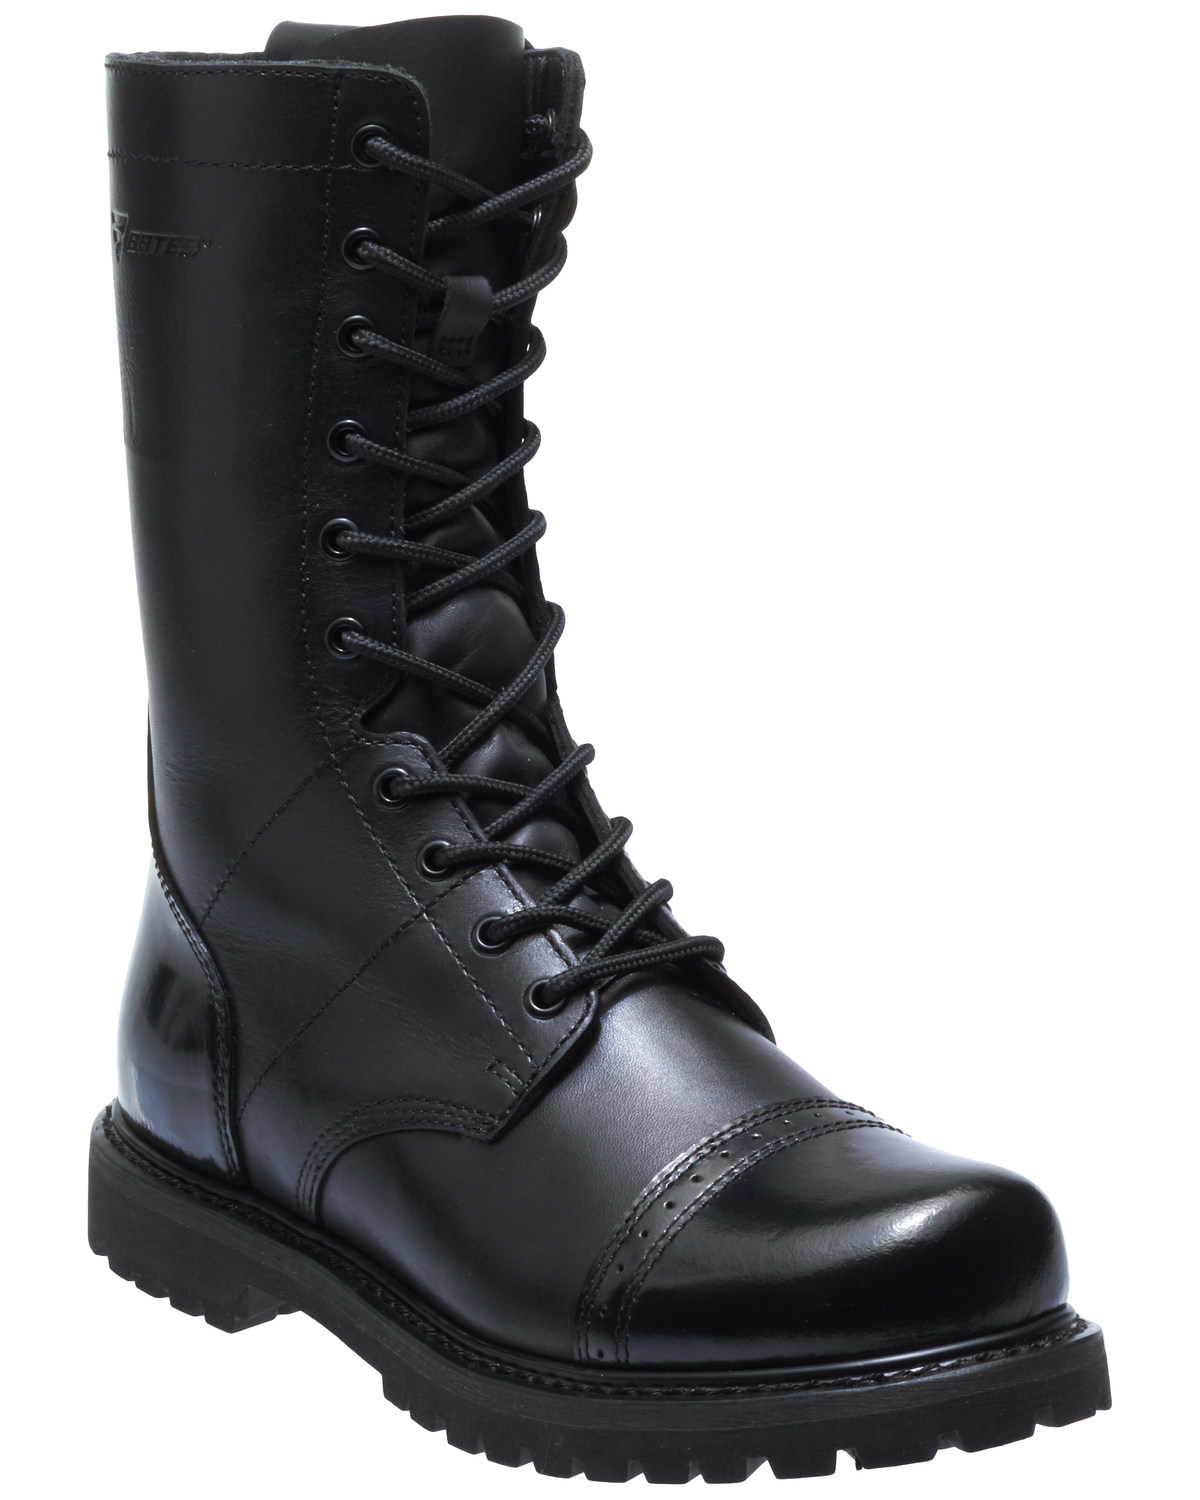 Bates Men's Paratrooper Work Boots - Soft Toe